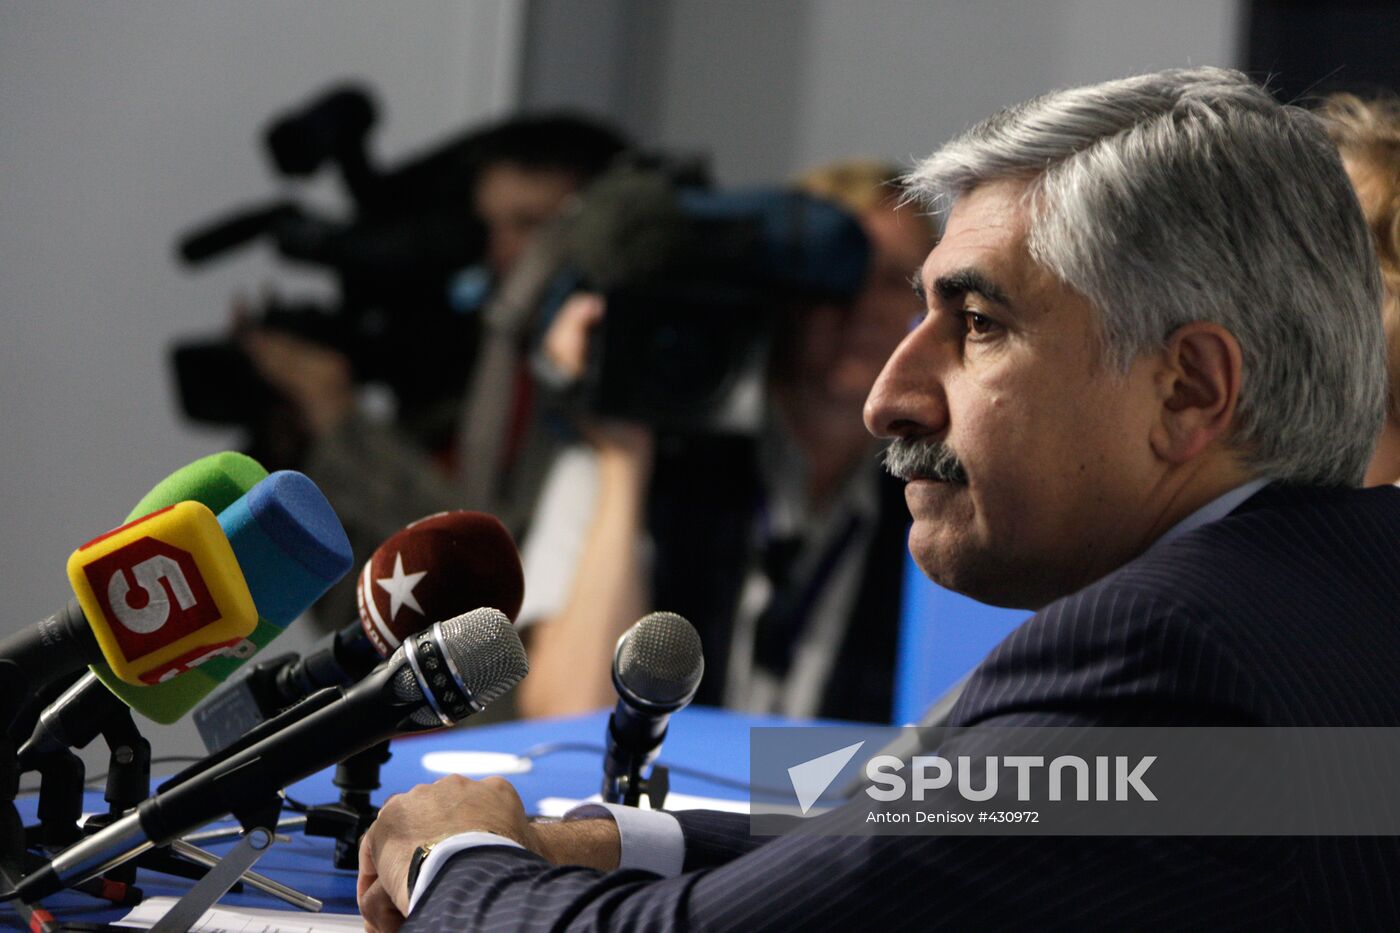 Sukhoi Company CEO Mikhail Pogosyan gives news conference